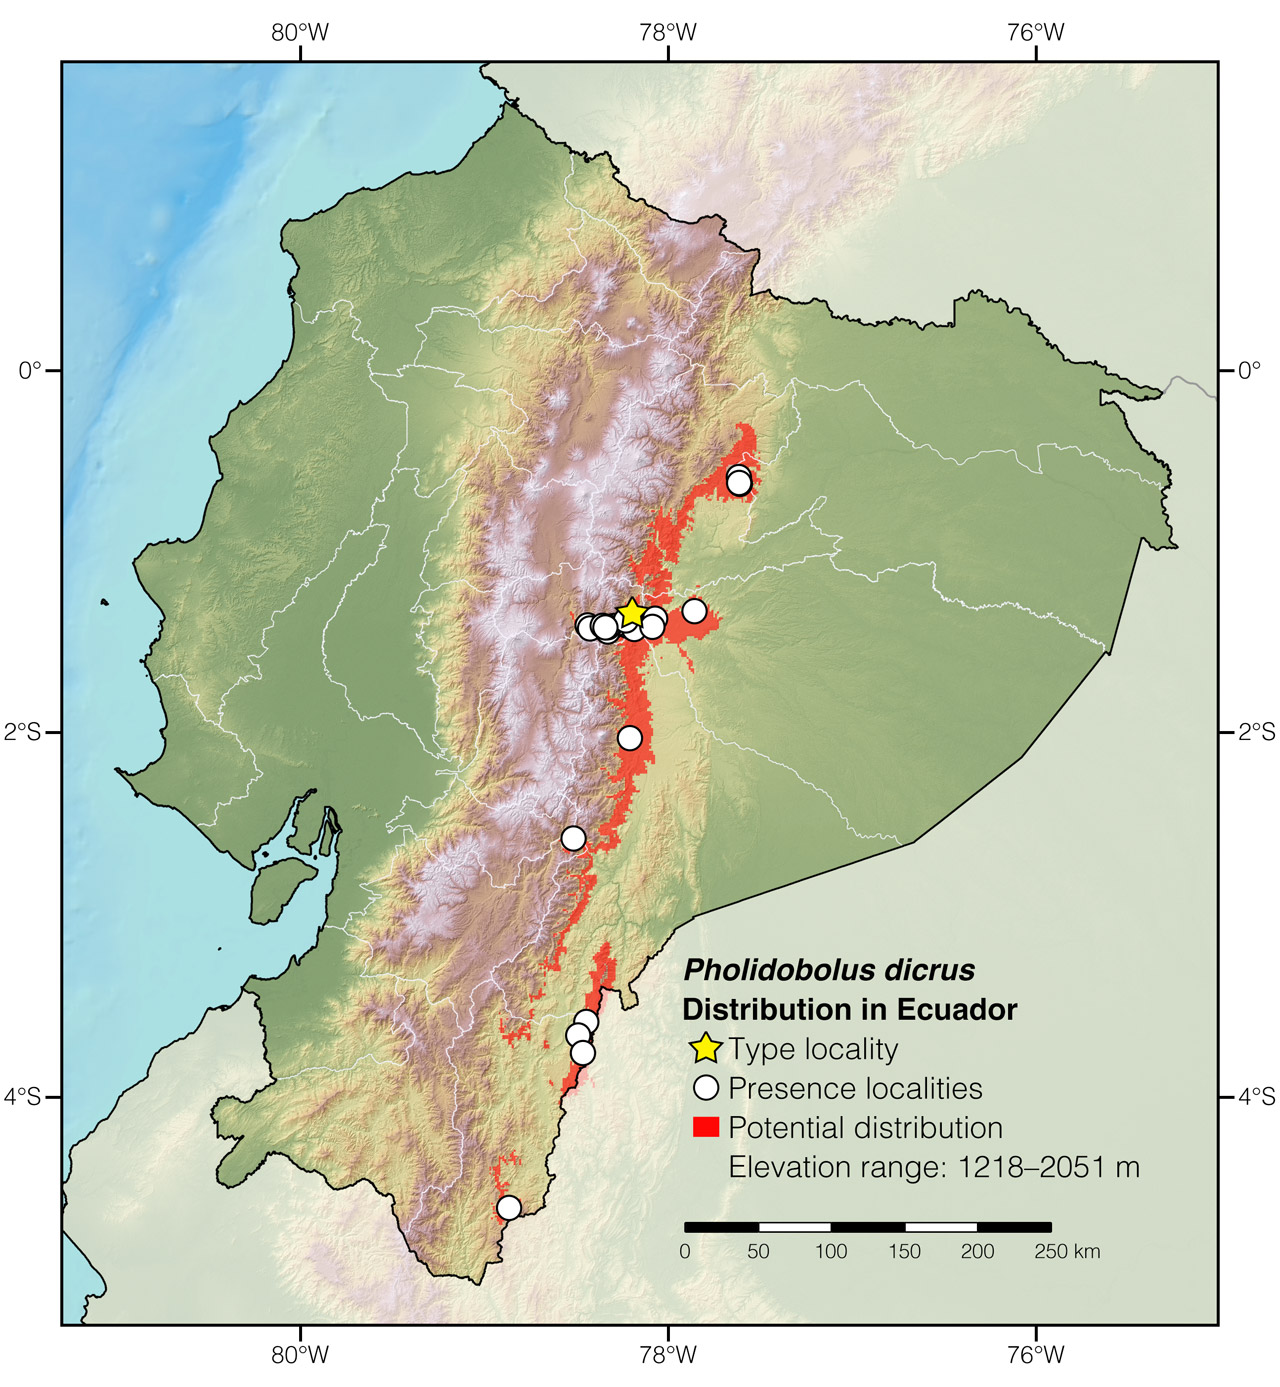 Distribution of Pholidobolus dicrus in Ecuador